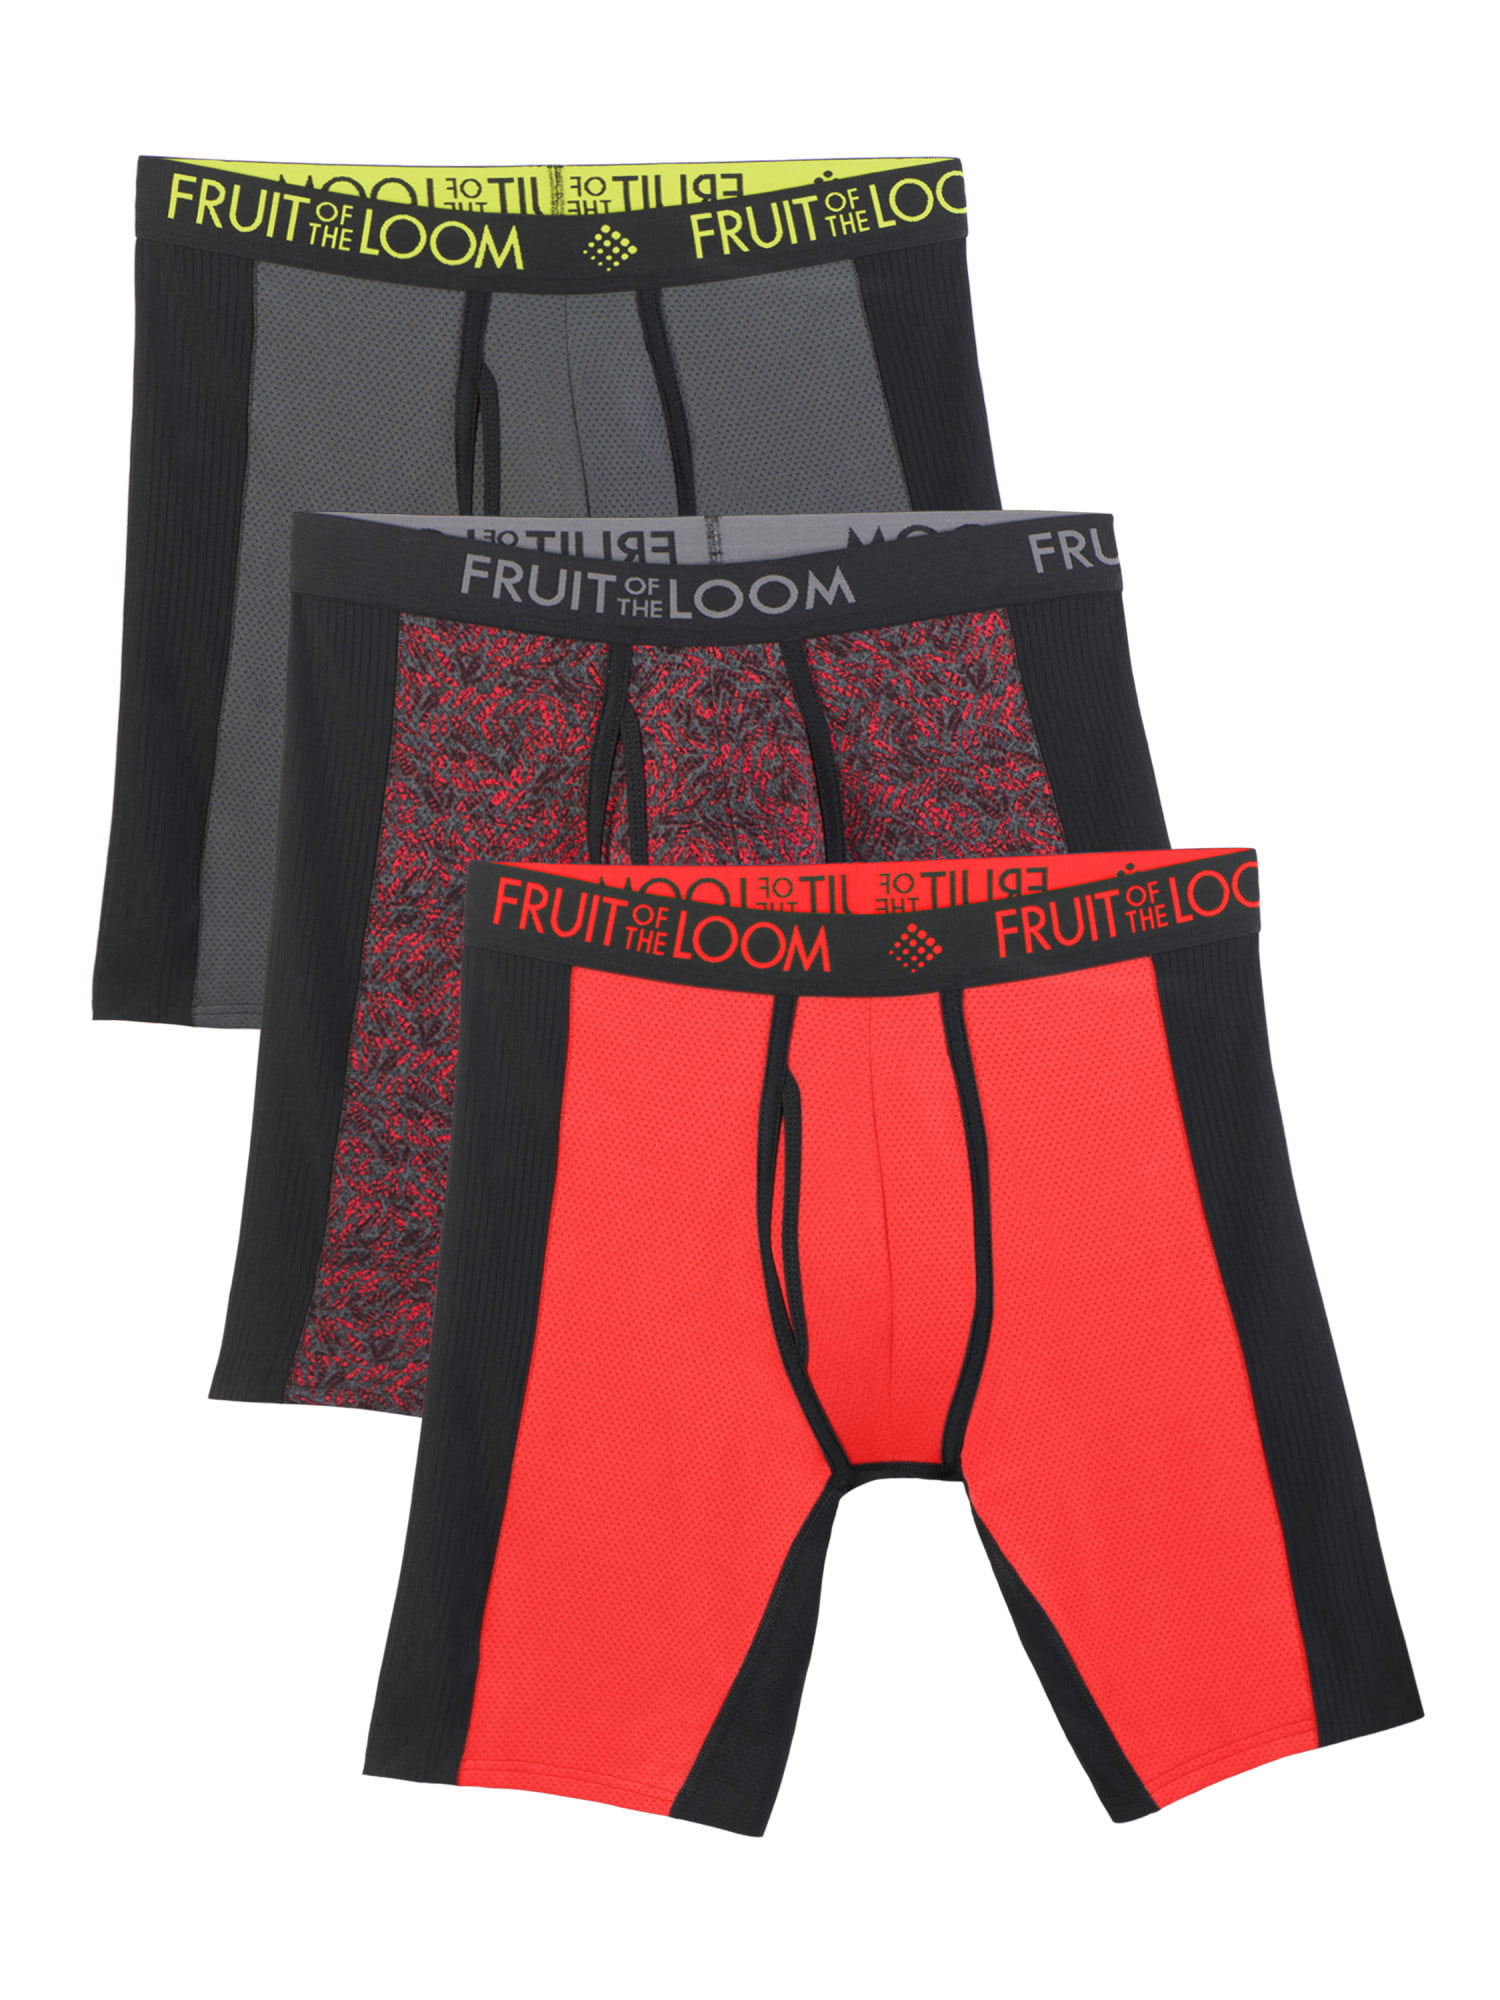 Fruit of the Loom Men's Breathable Performance Micro-Mesh Long Leg Boxer Briefs